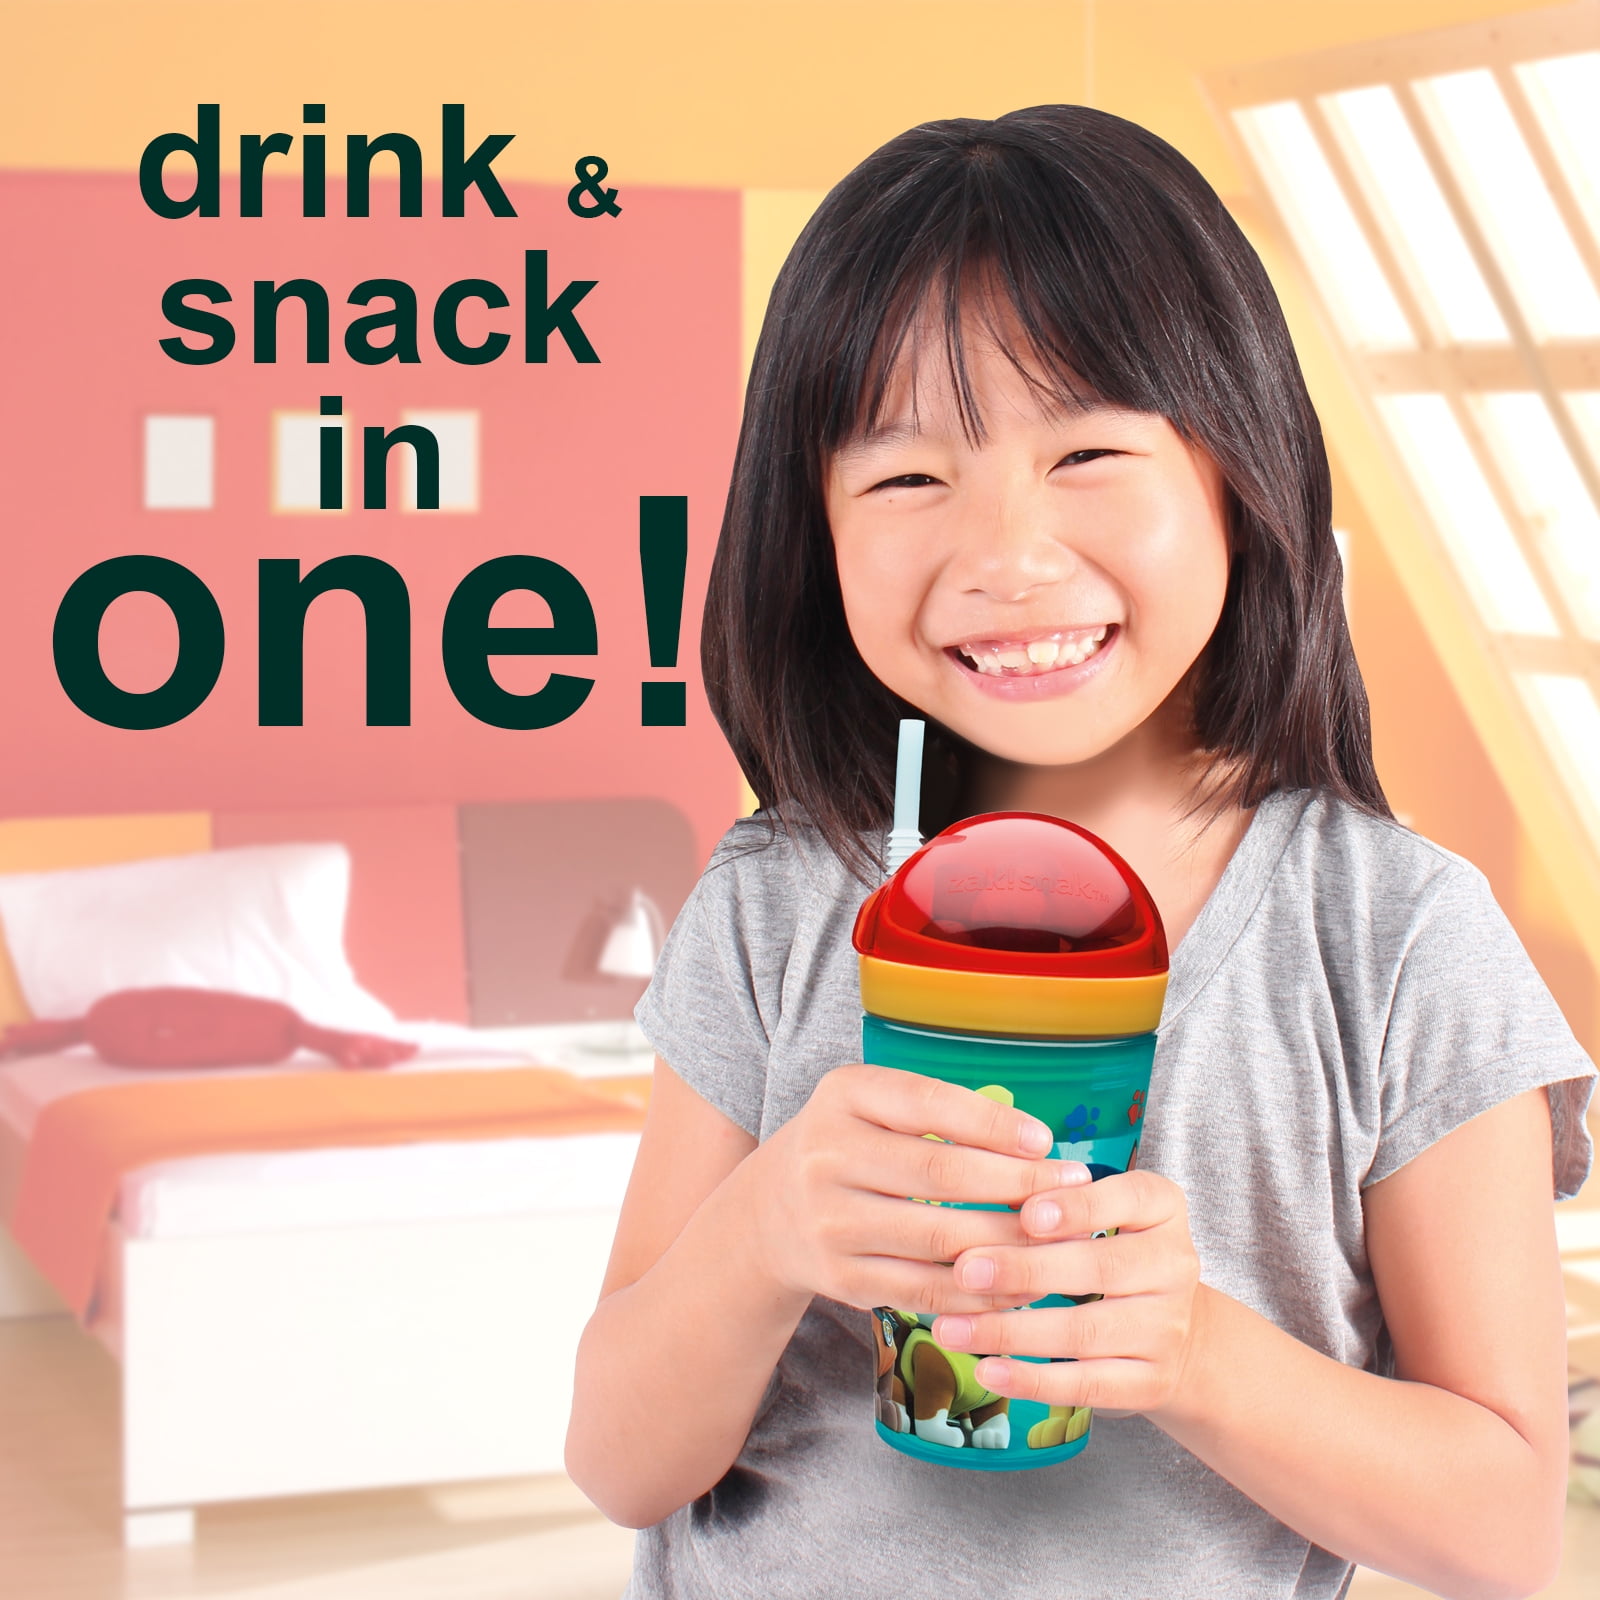 Zak designs kids cup mug 3+ blue red lid baseball theme rare juice soda  snacks